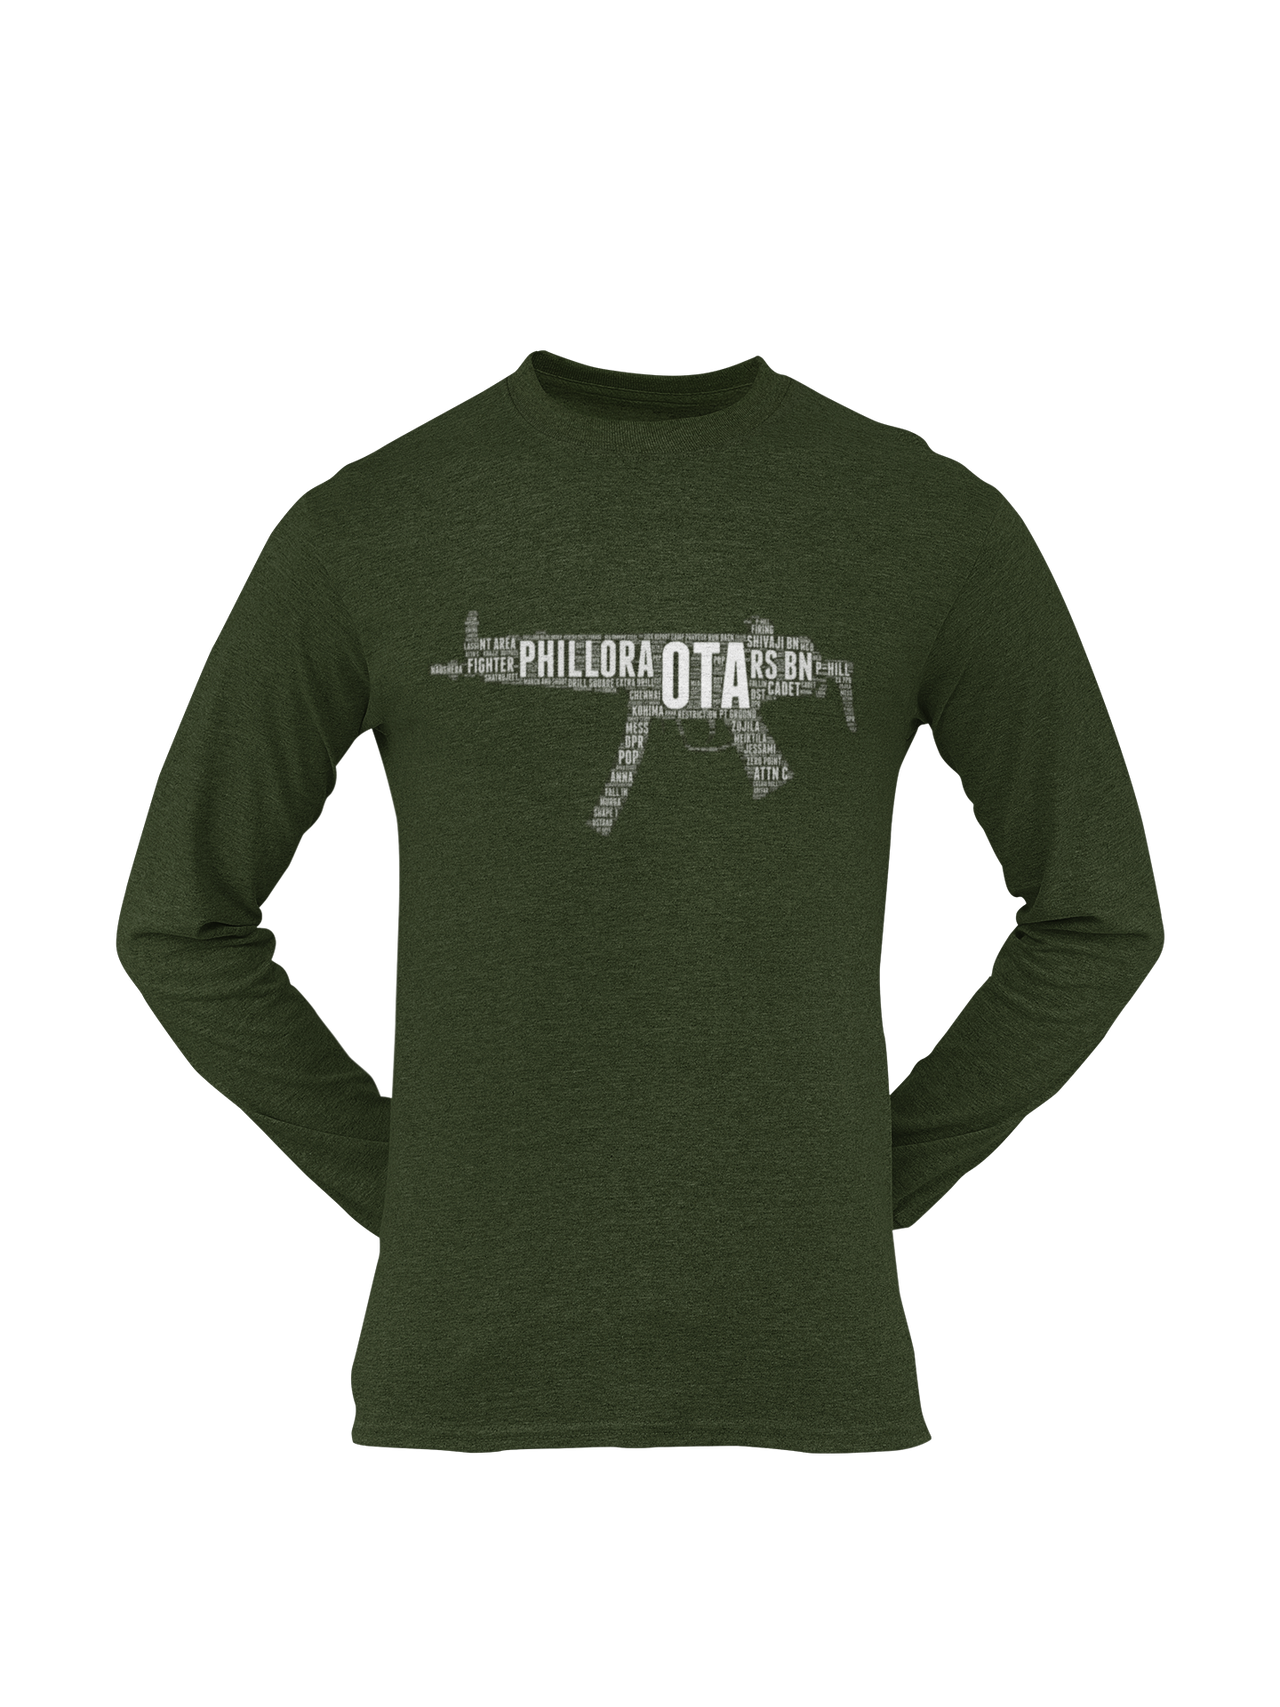 OTA T-shirt - Word Cloud Phillora - MP5 (Men)